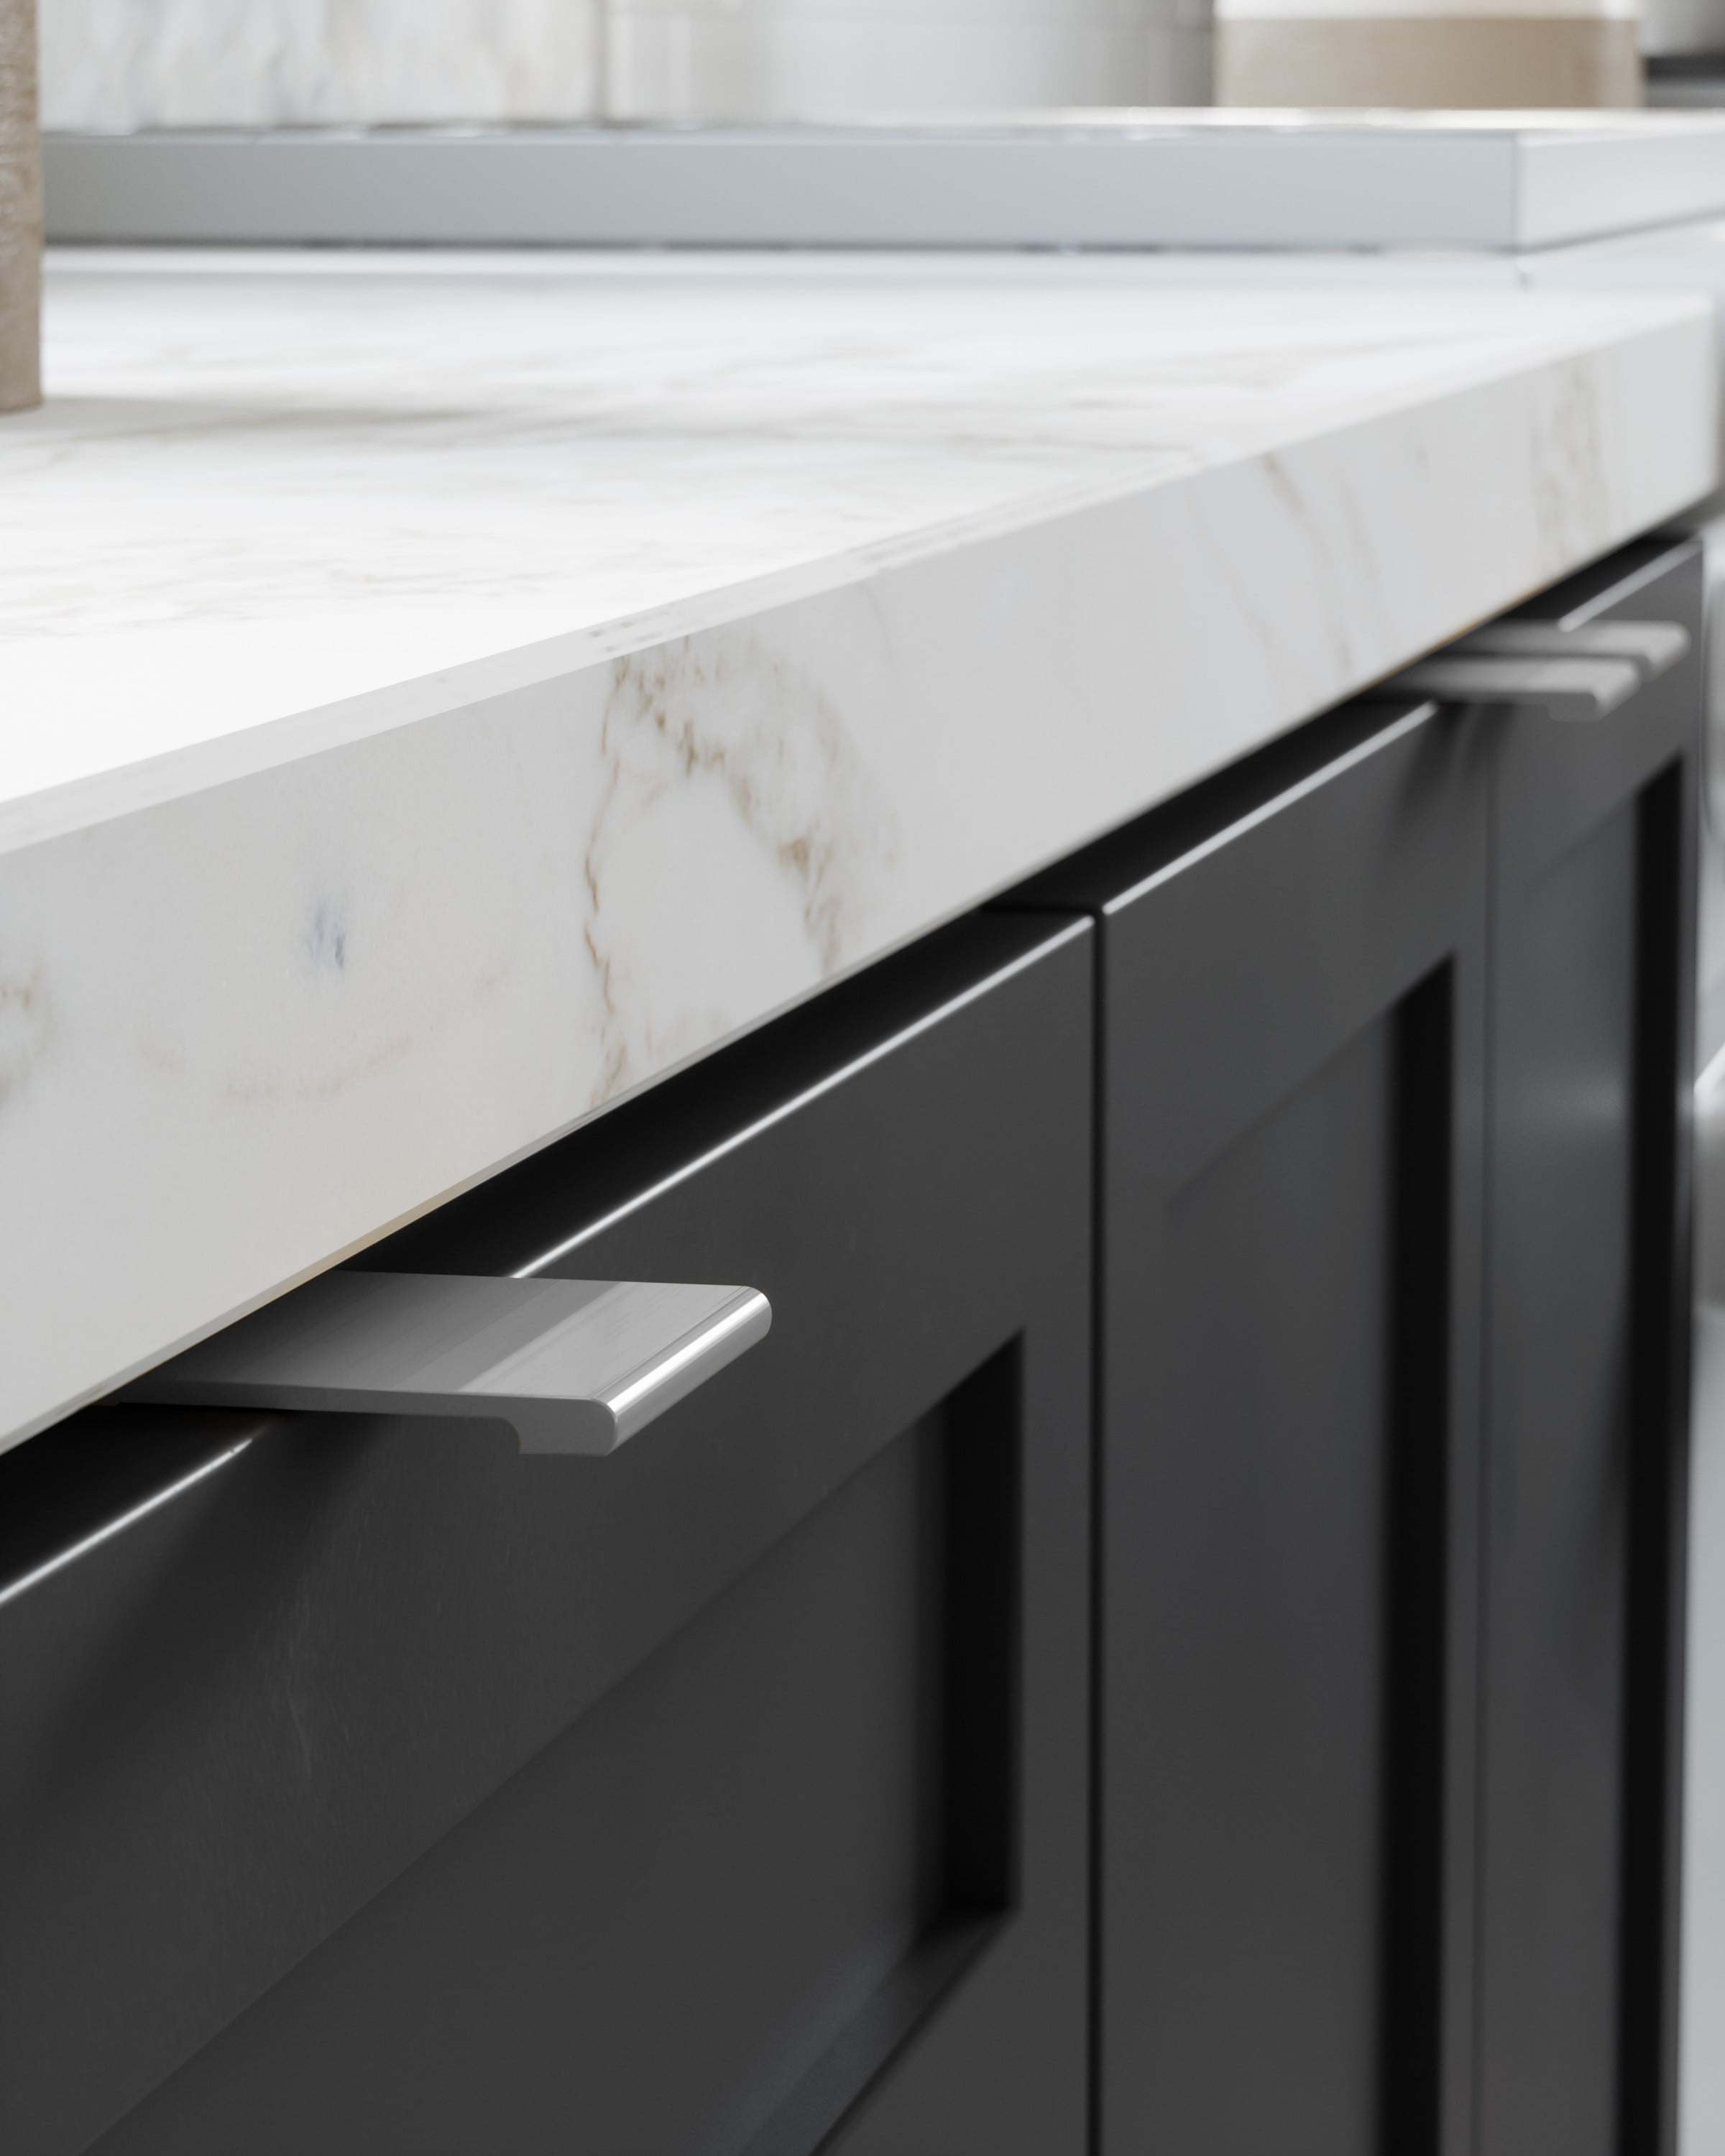 Peaha 10 Pack Kitchen Cabinet Handles Black Cabinet Hardware Cabinet Finger  Edge Pulls Pack Door Finger Pull 160mm/6 1/3in Center to Center